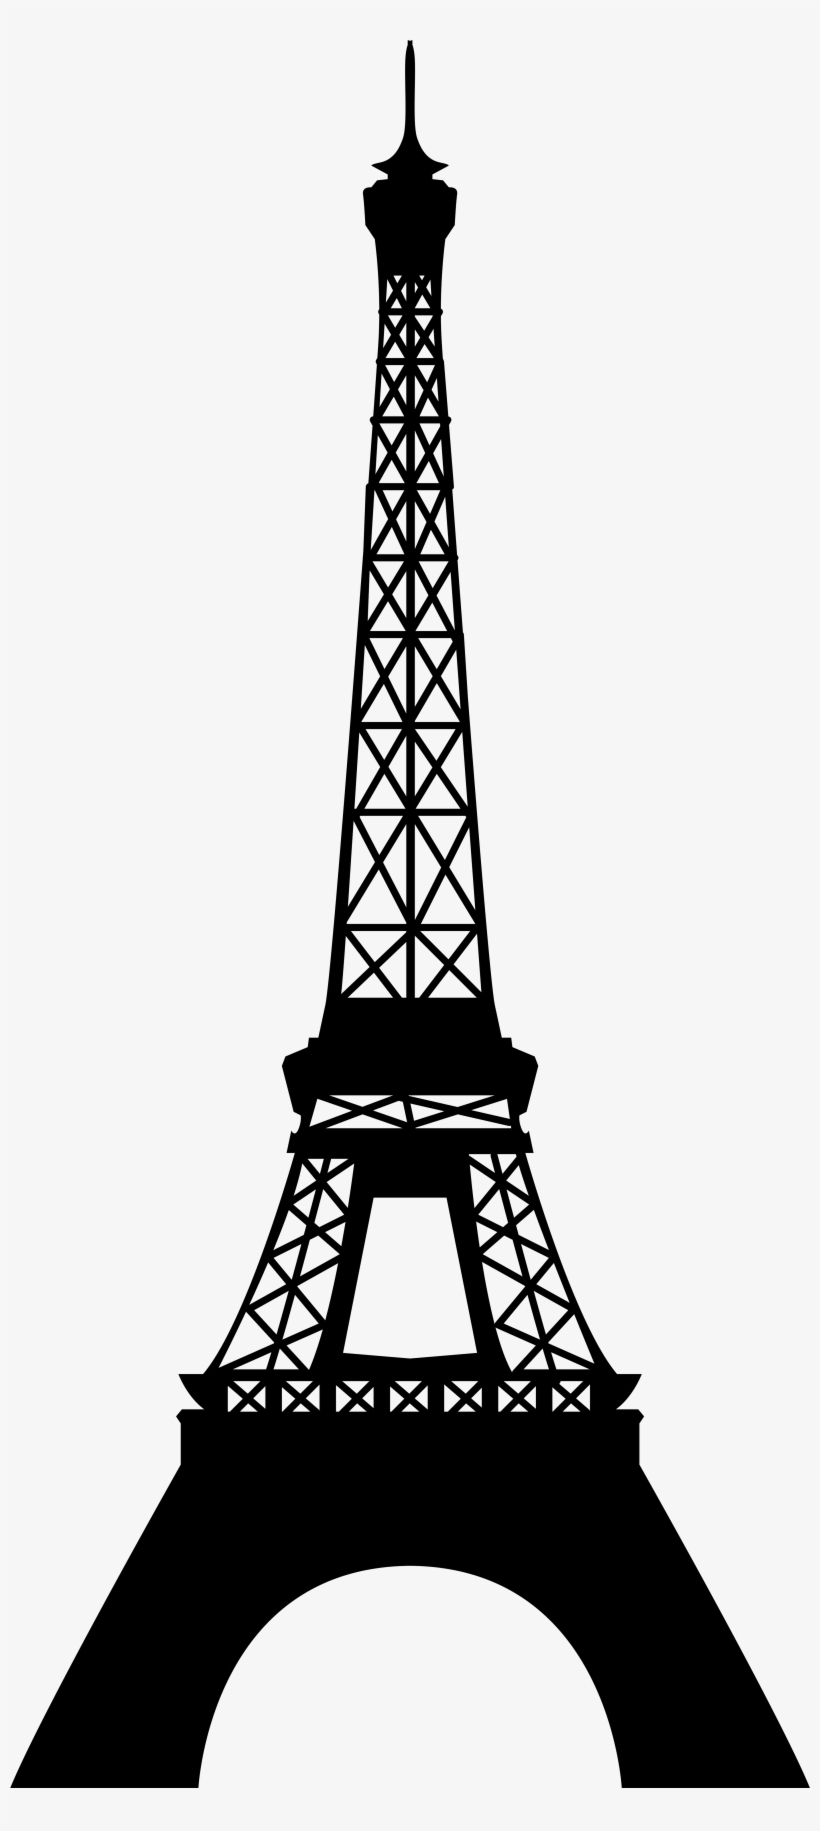 Eiffel Tower Silhouette Transparent Png Clip Art Image - Eiffel Tower Silhouette Png, transparent png #31276